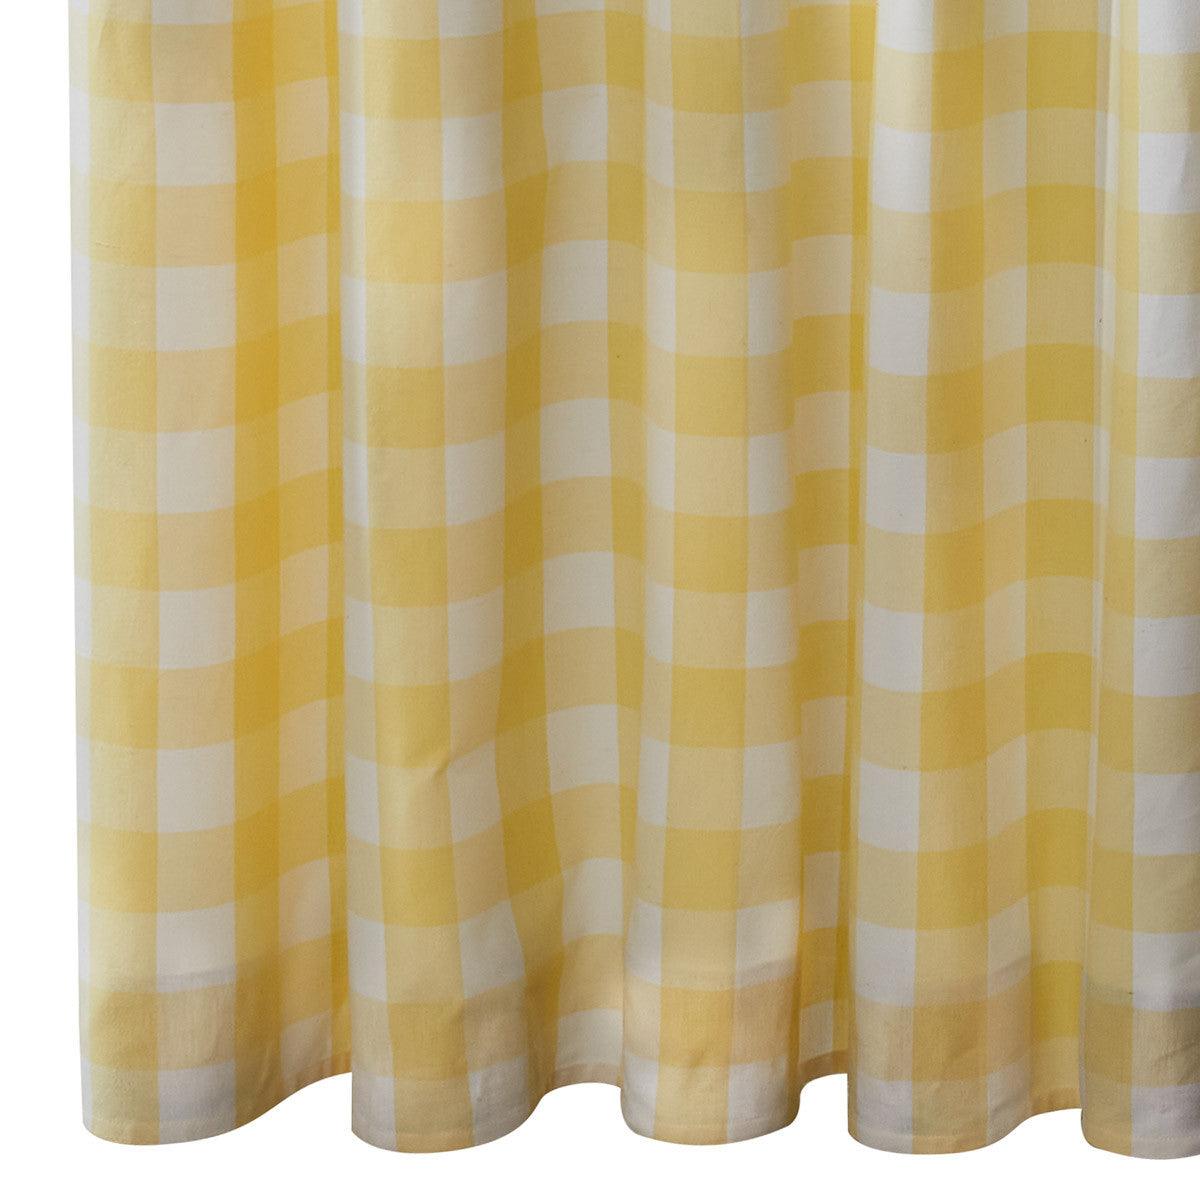 Wicklow Shower Curtain - Yellow 72" x 72" Park Designs - The Fox Decor